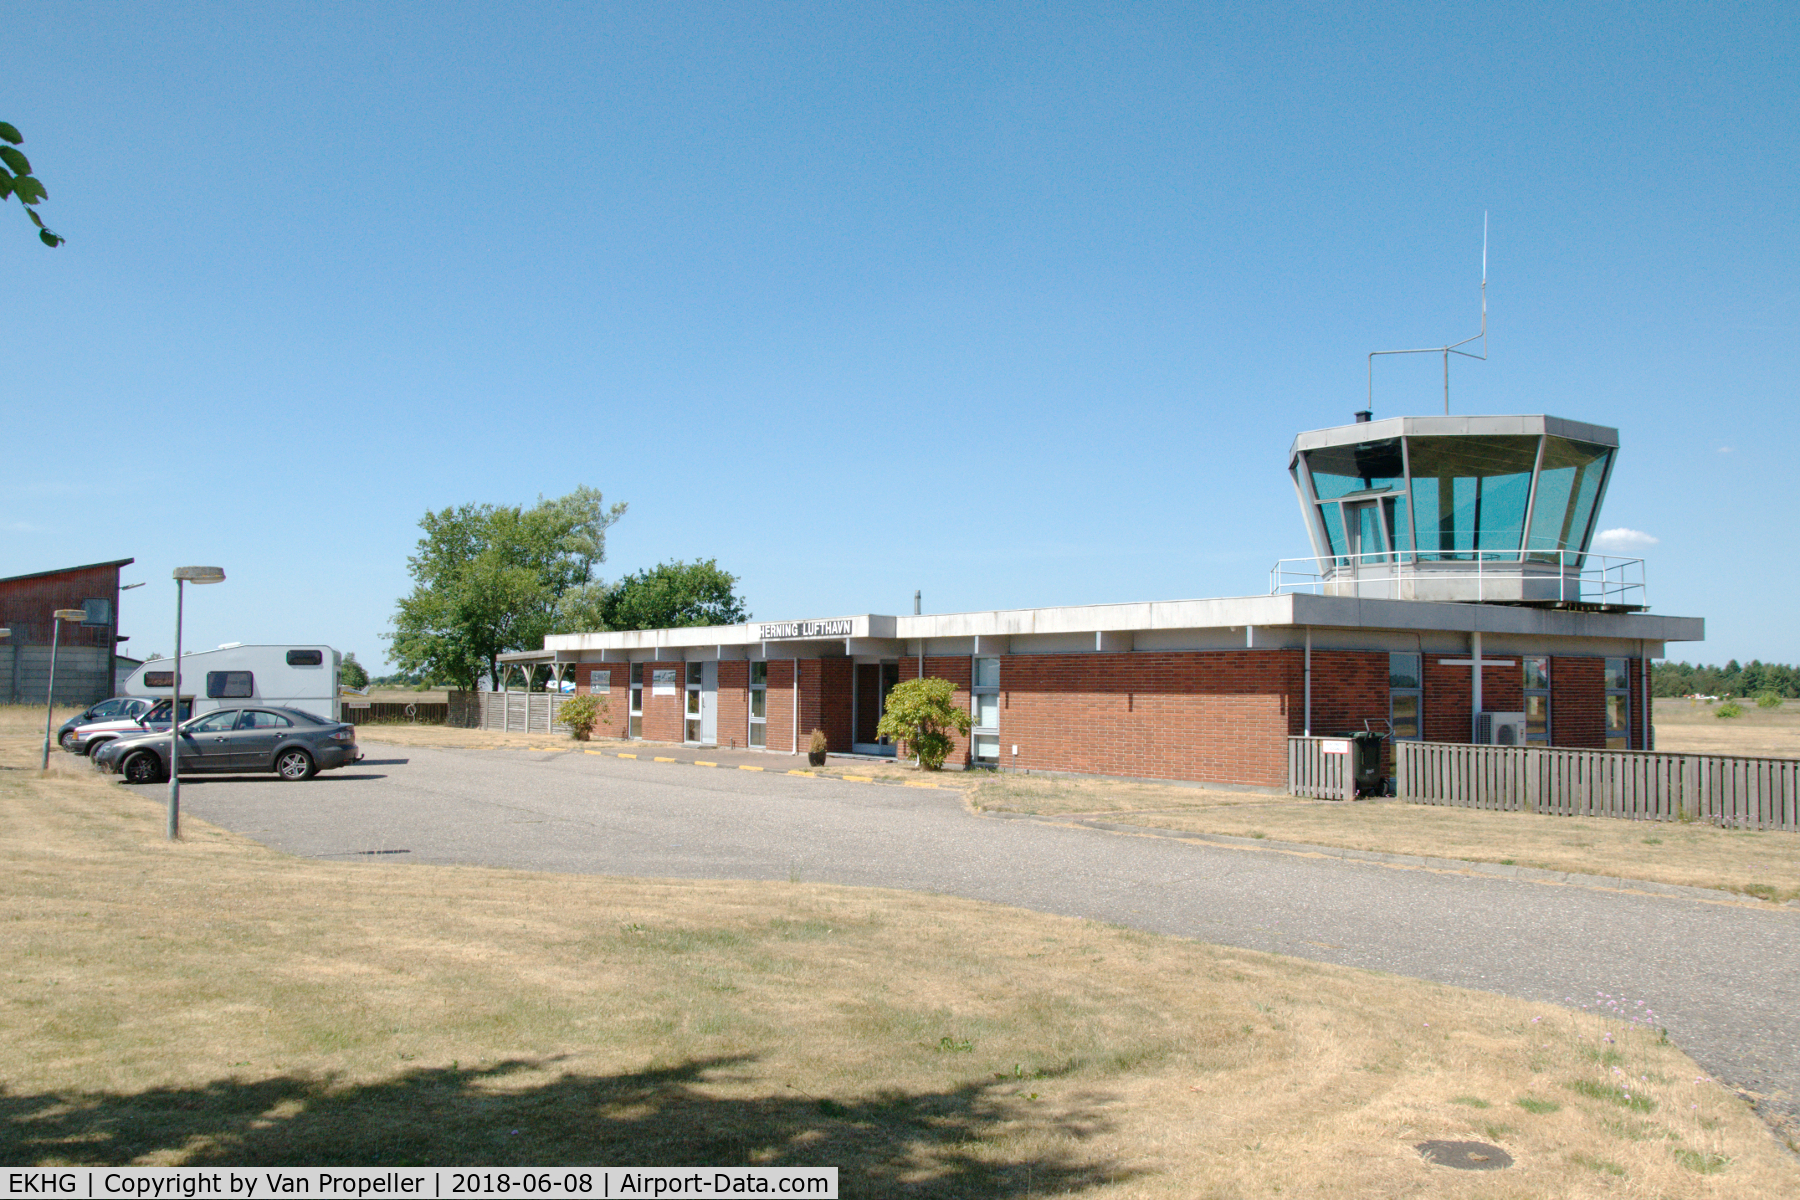 Herning Airport, Herning Denmark (EKHG) - Herning airfield terminal and tower